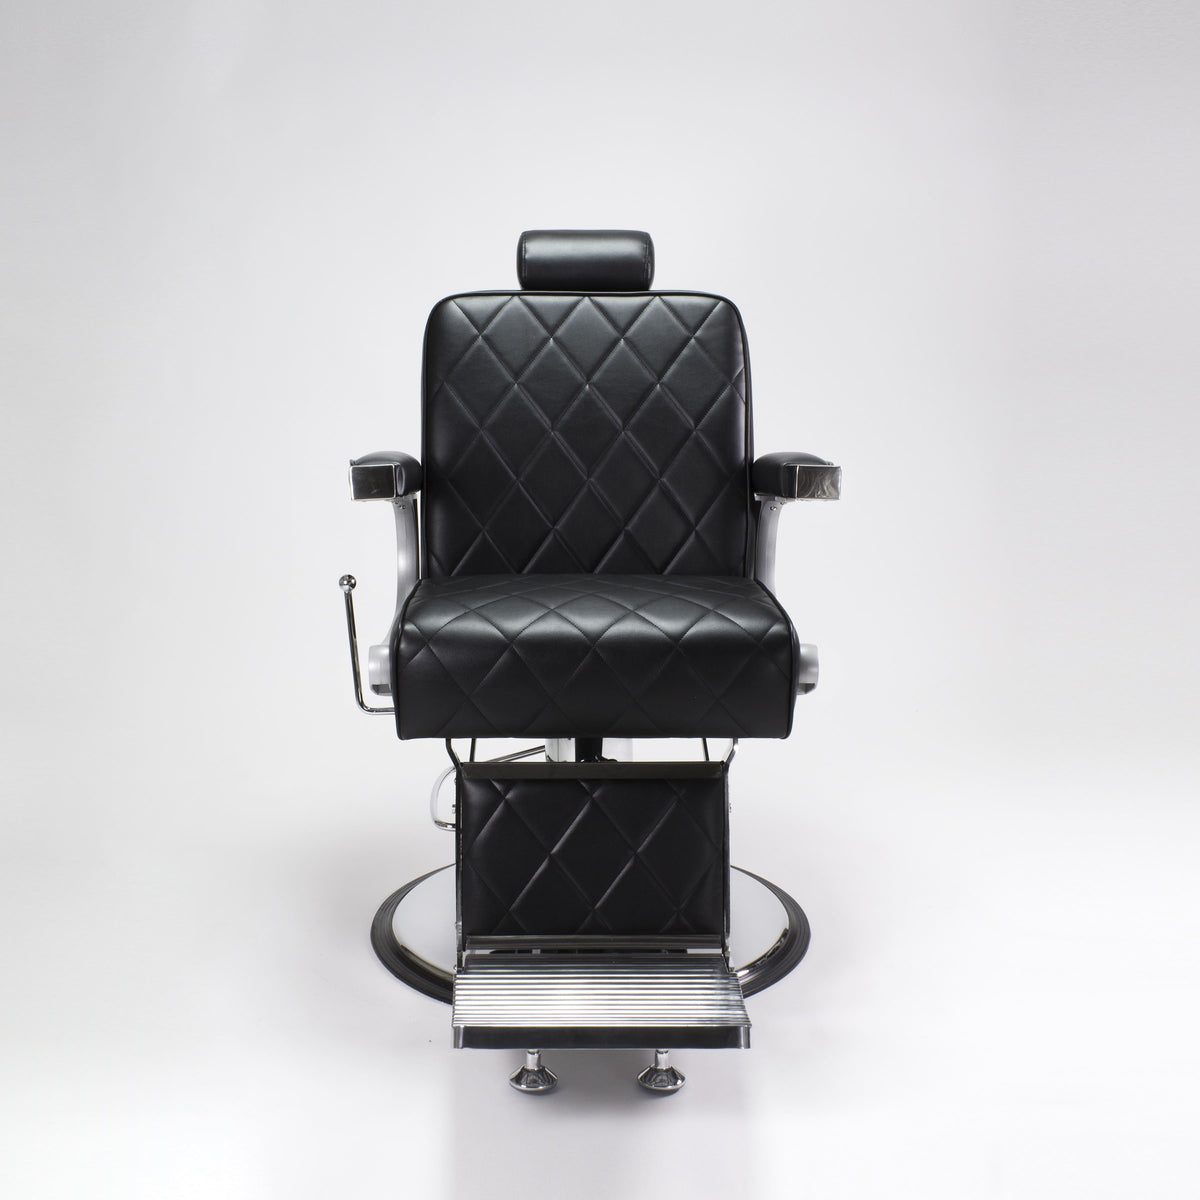 King Barber Chair - Black